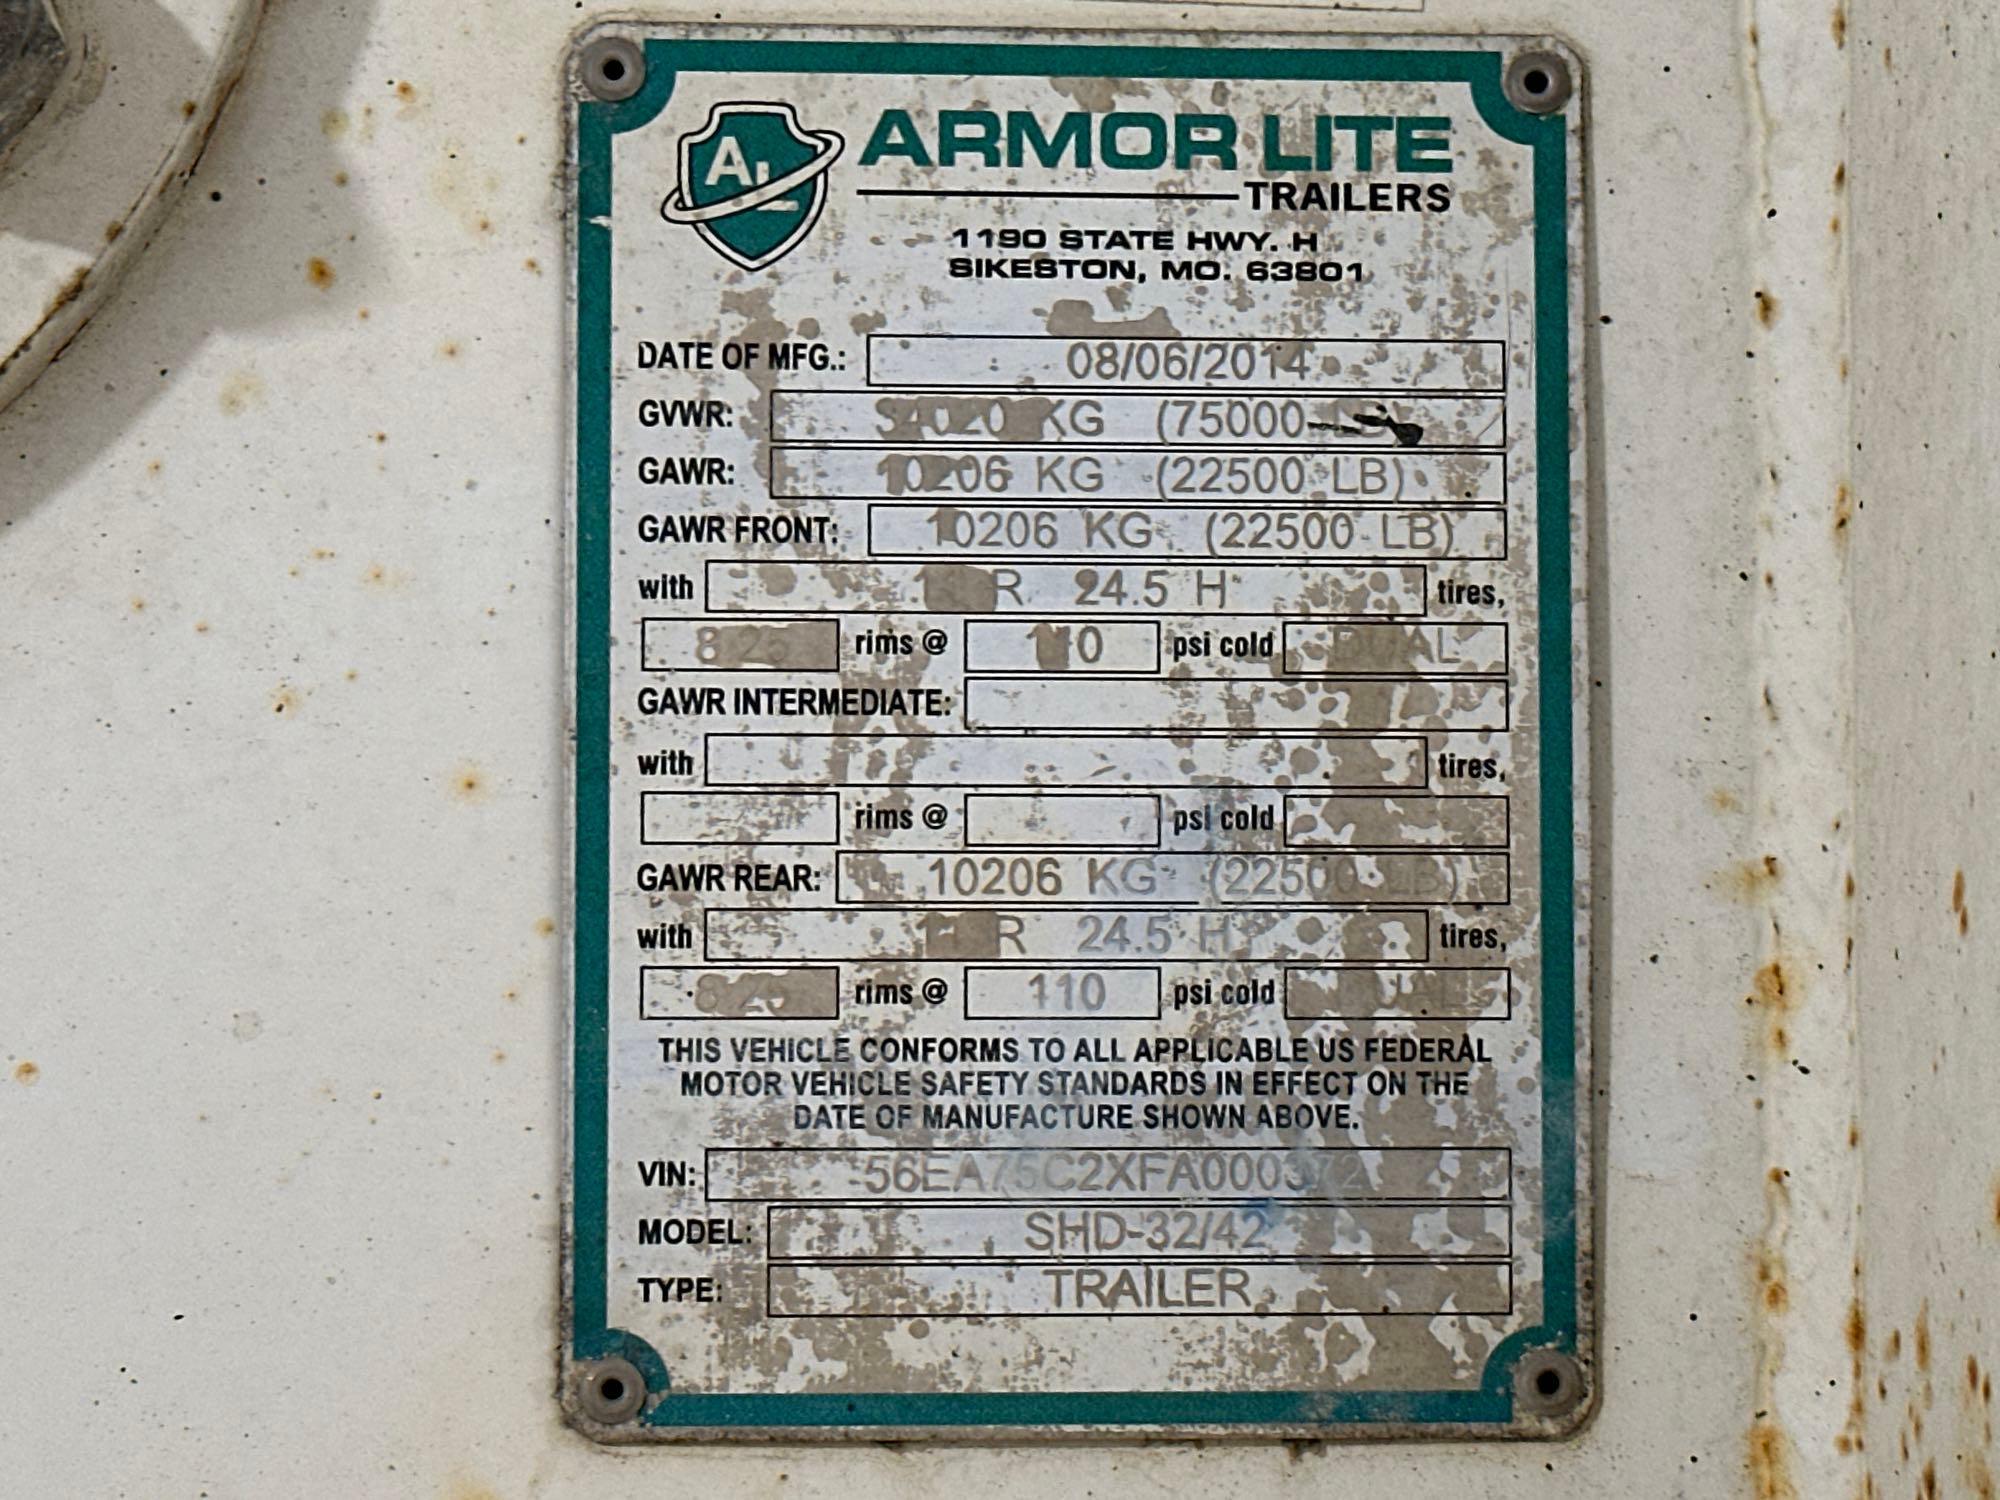 2015 Armor Lite SHD-32/42 Half Round Dump Trailer